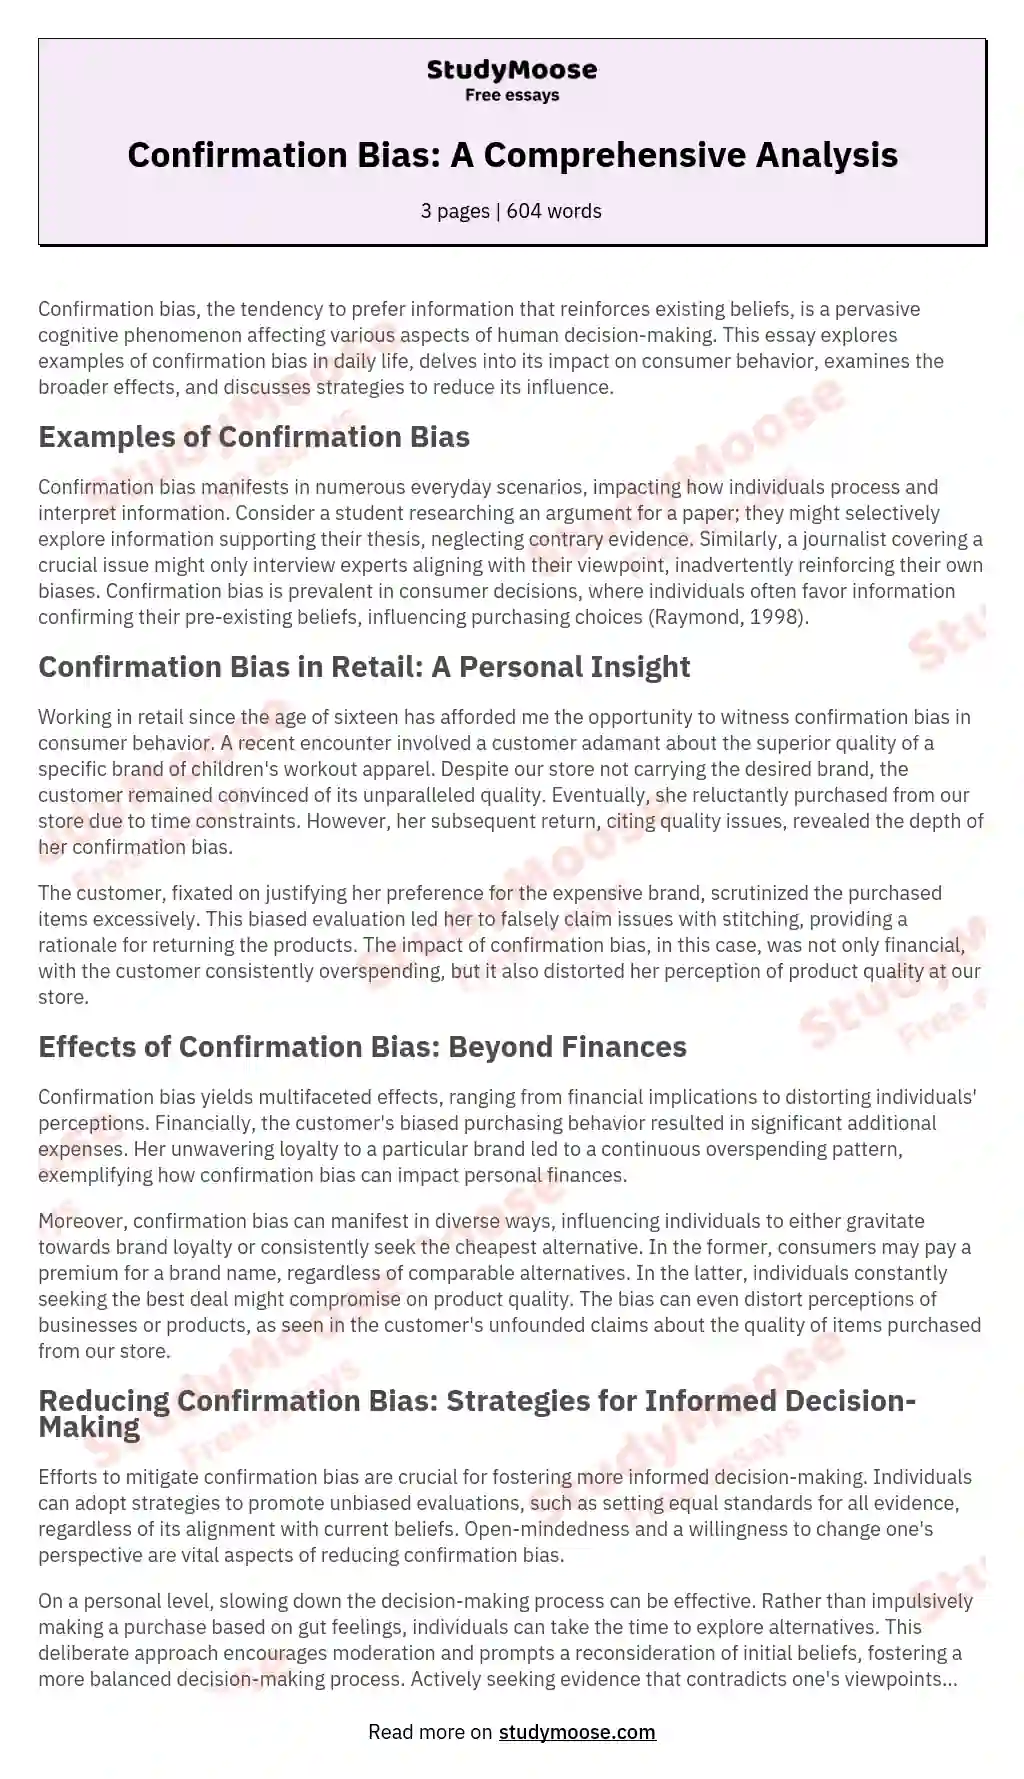 Confirmation Bias: A Comprehensive Analysis essay